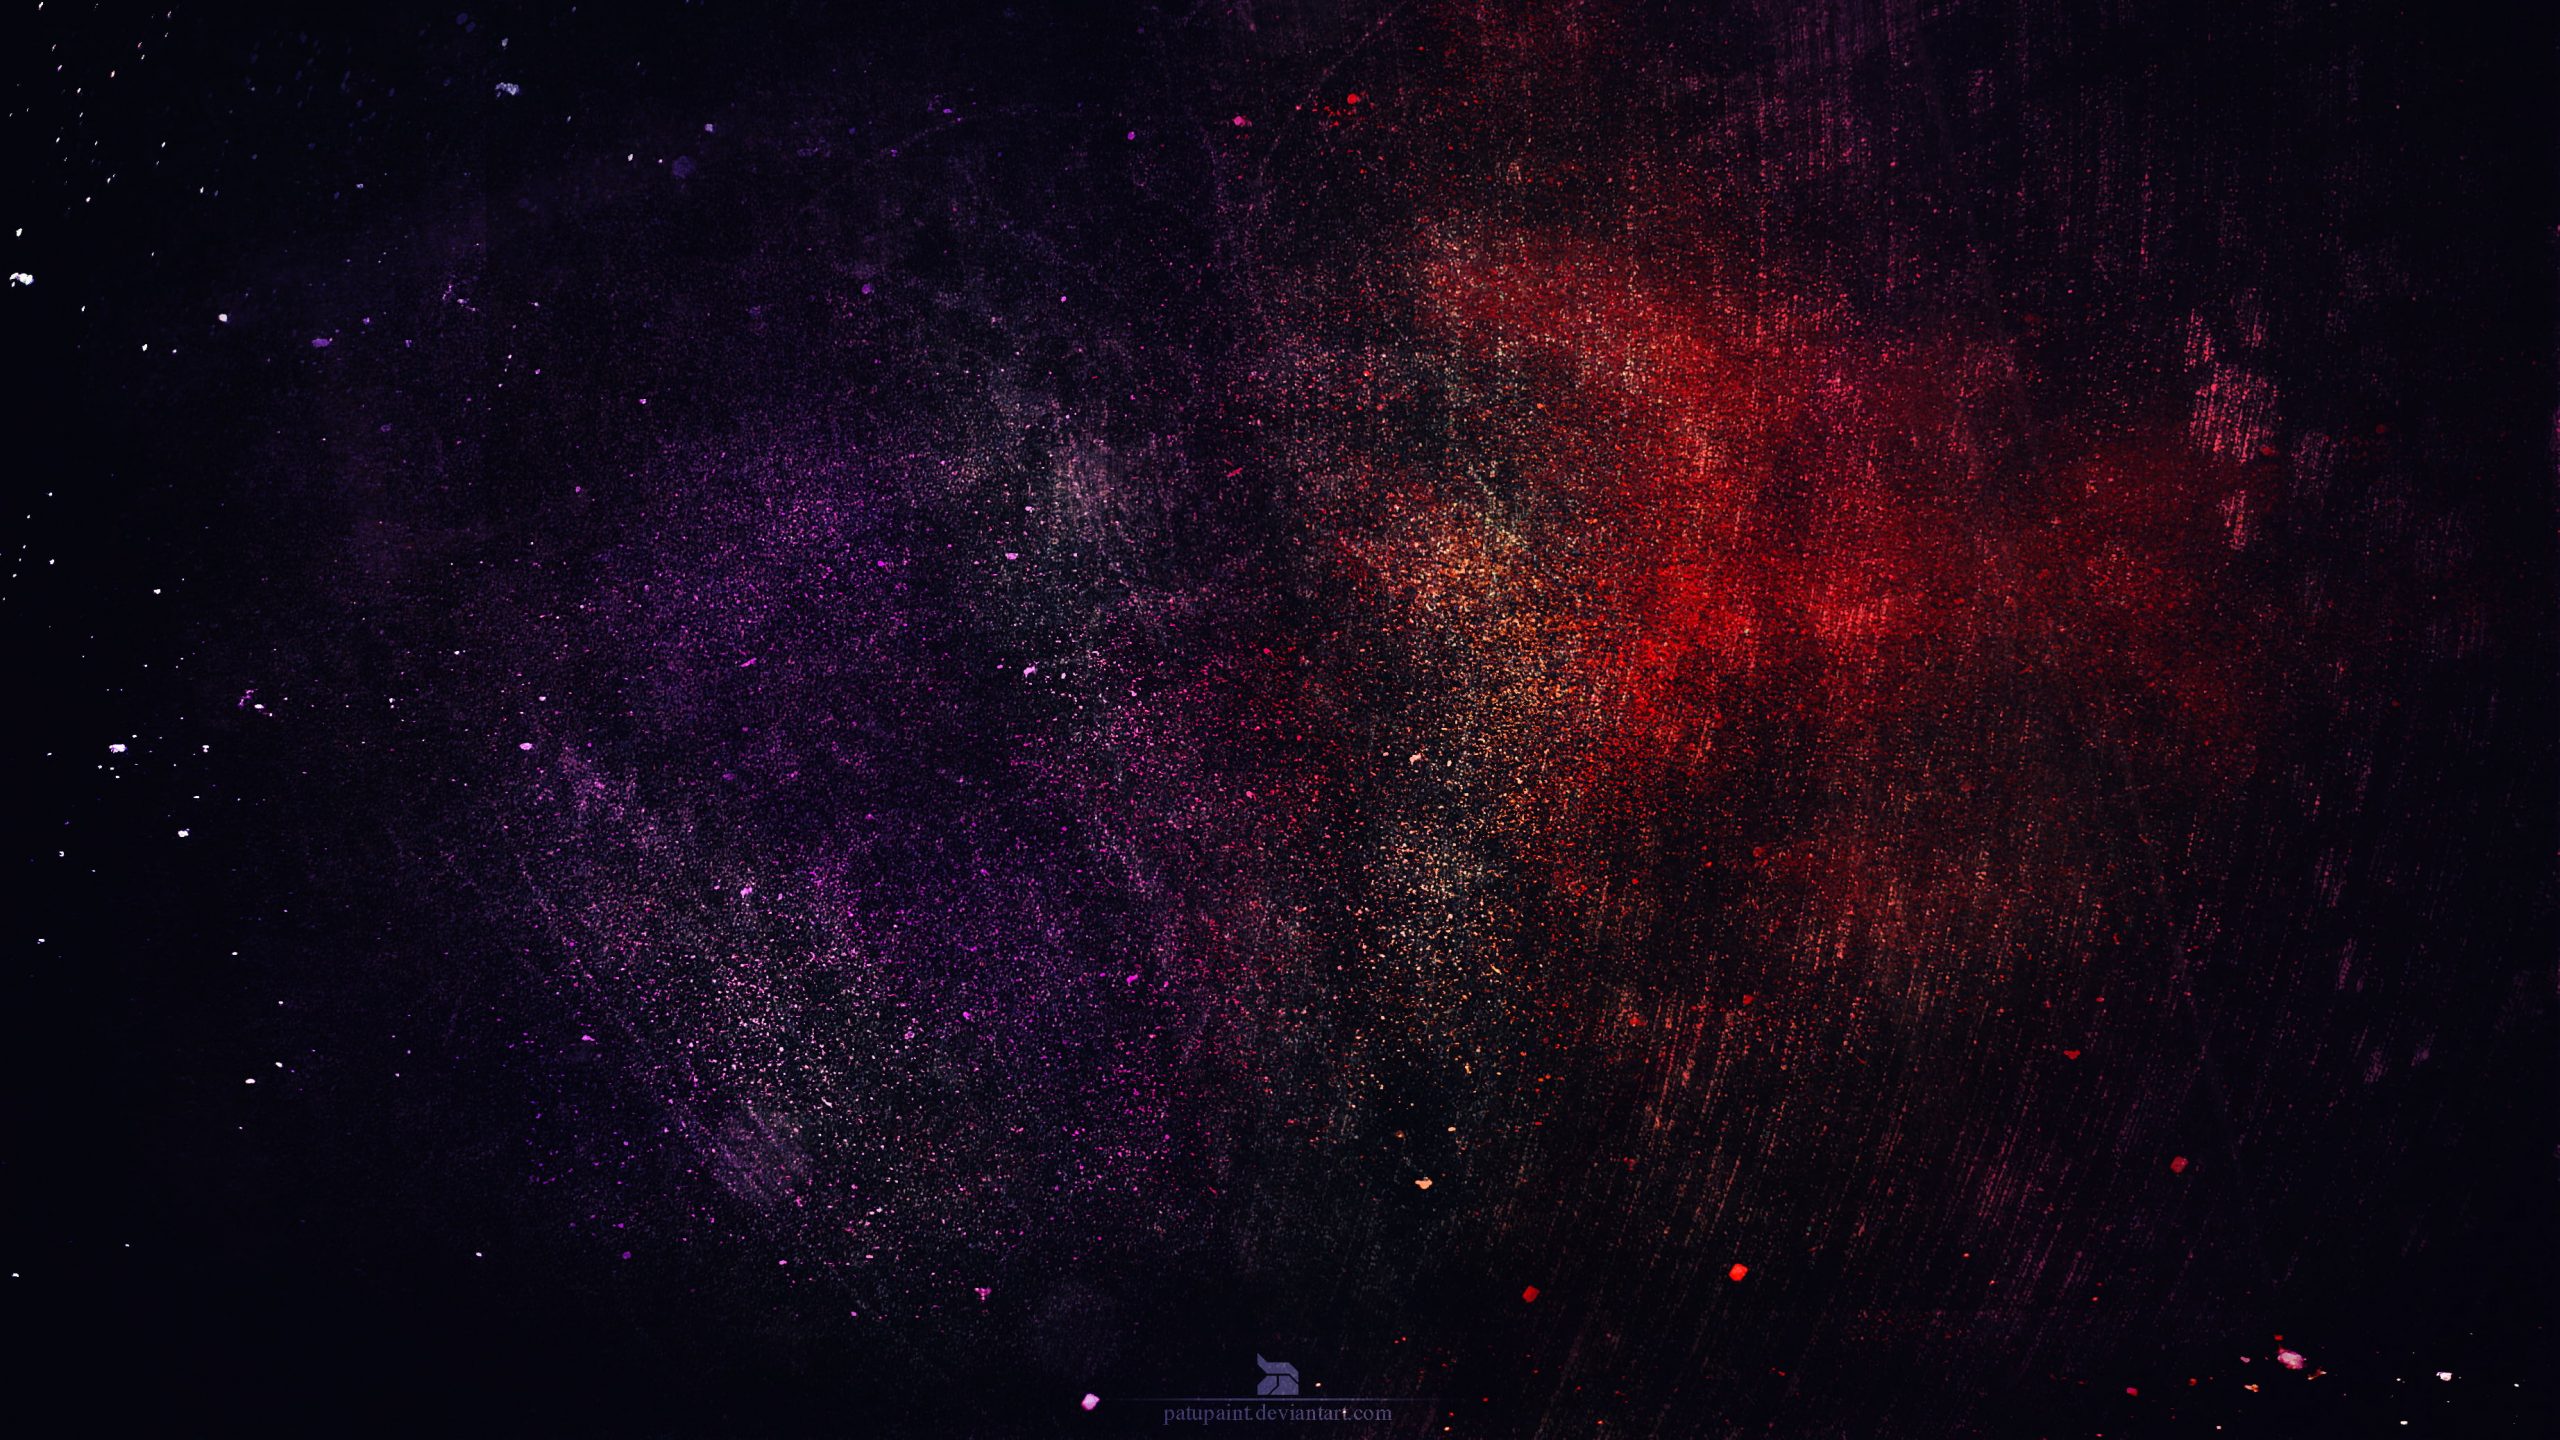 Galaxy wallpaper, digital art, artwork, abstract, red, purple